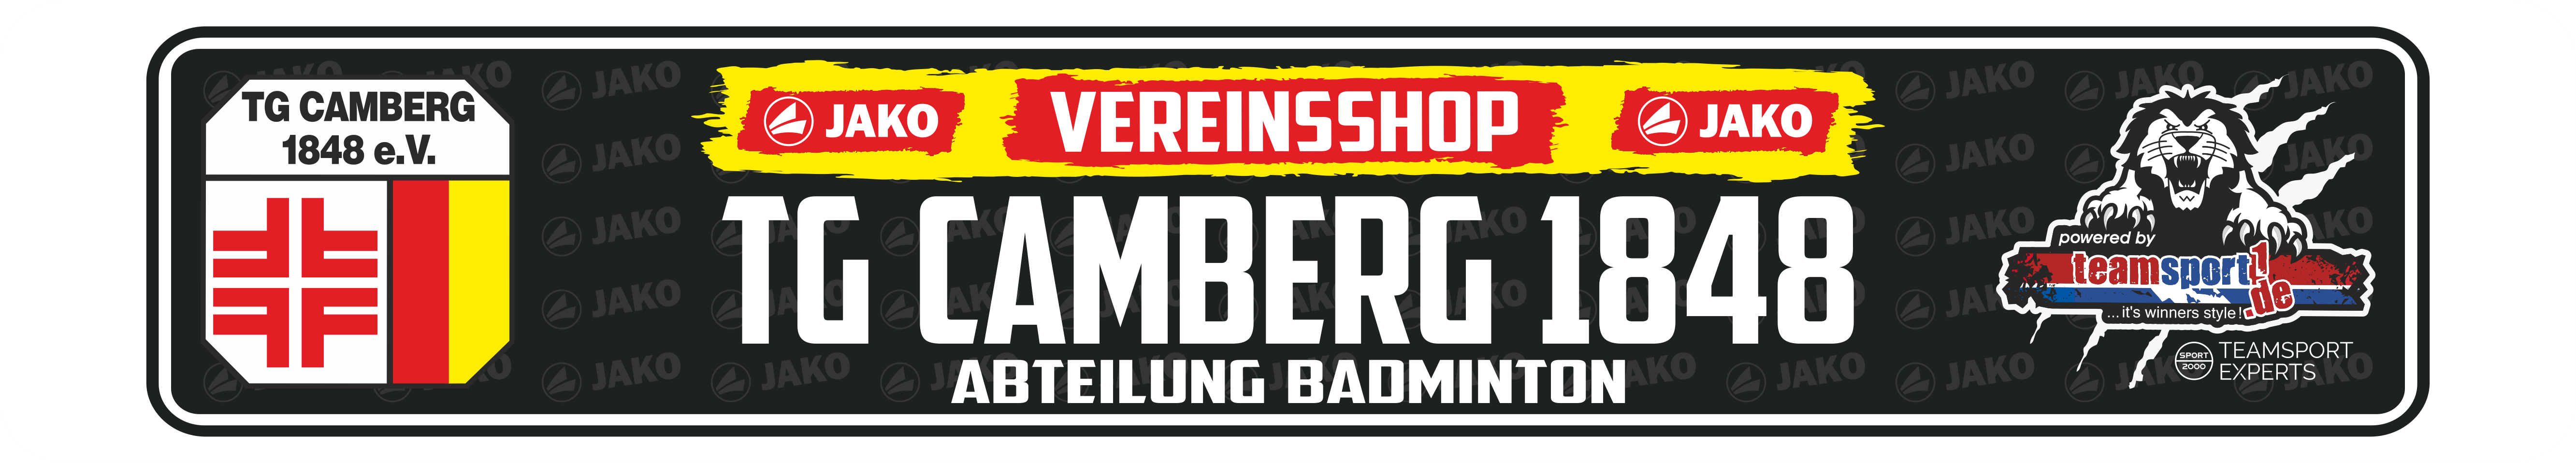 TG Camberg Badminton Title Image